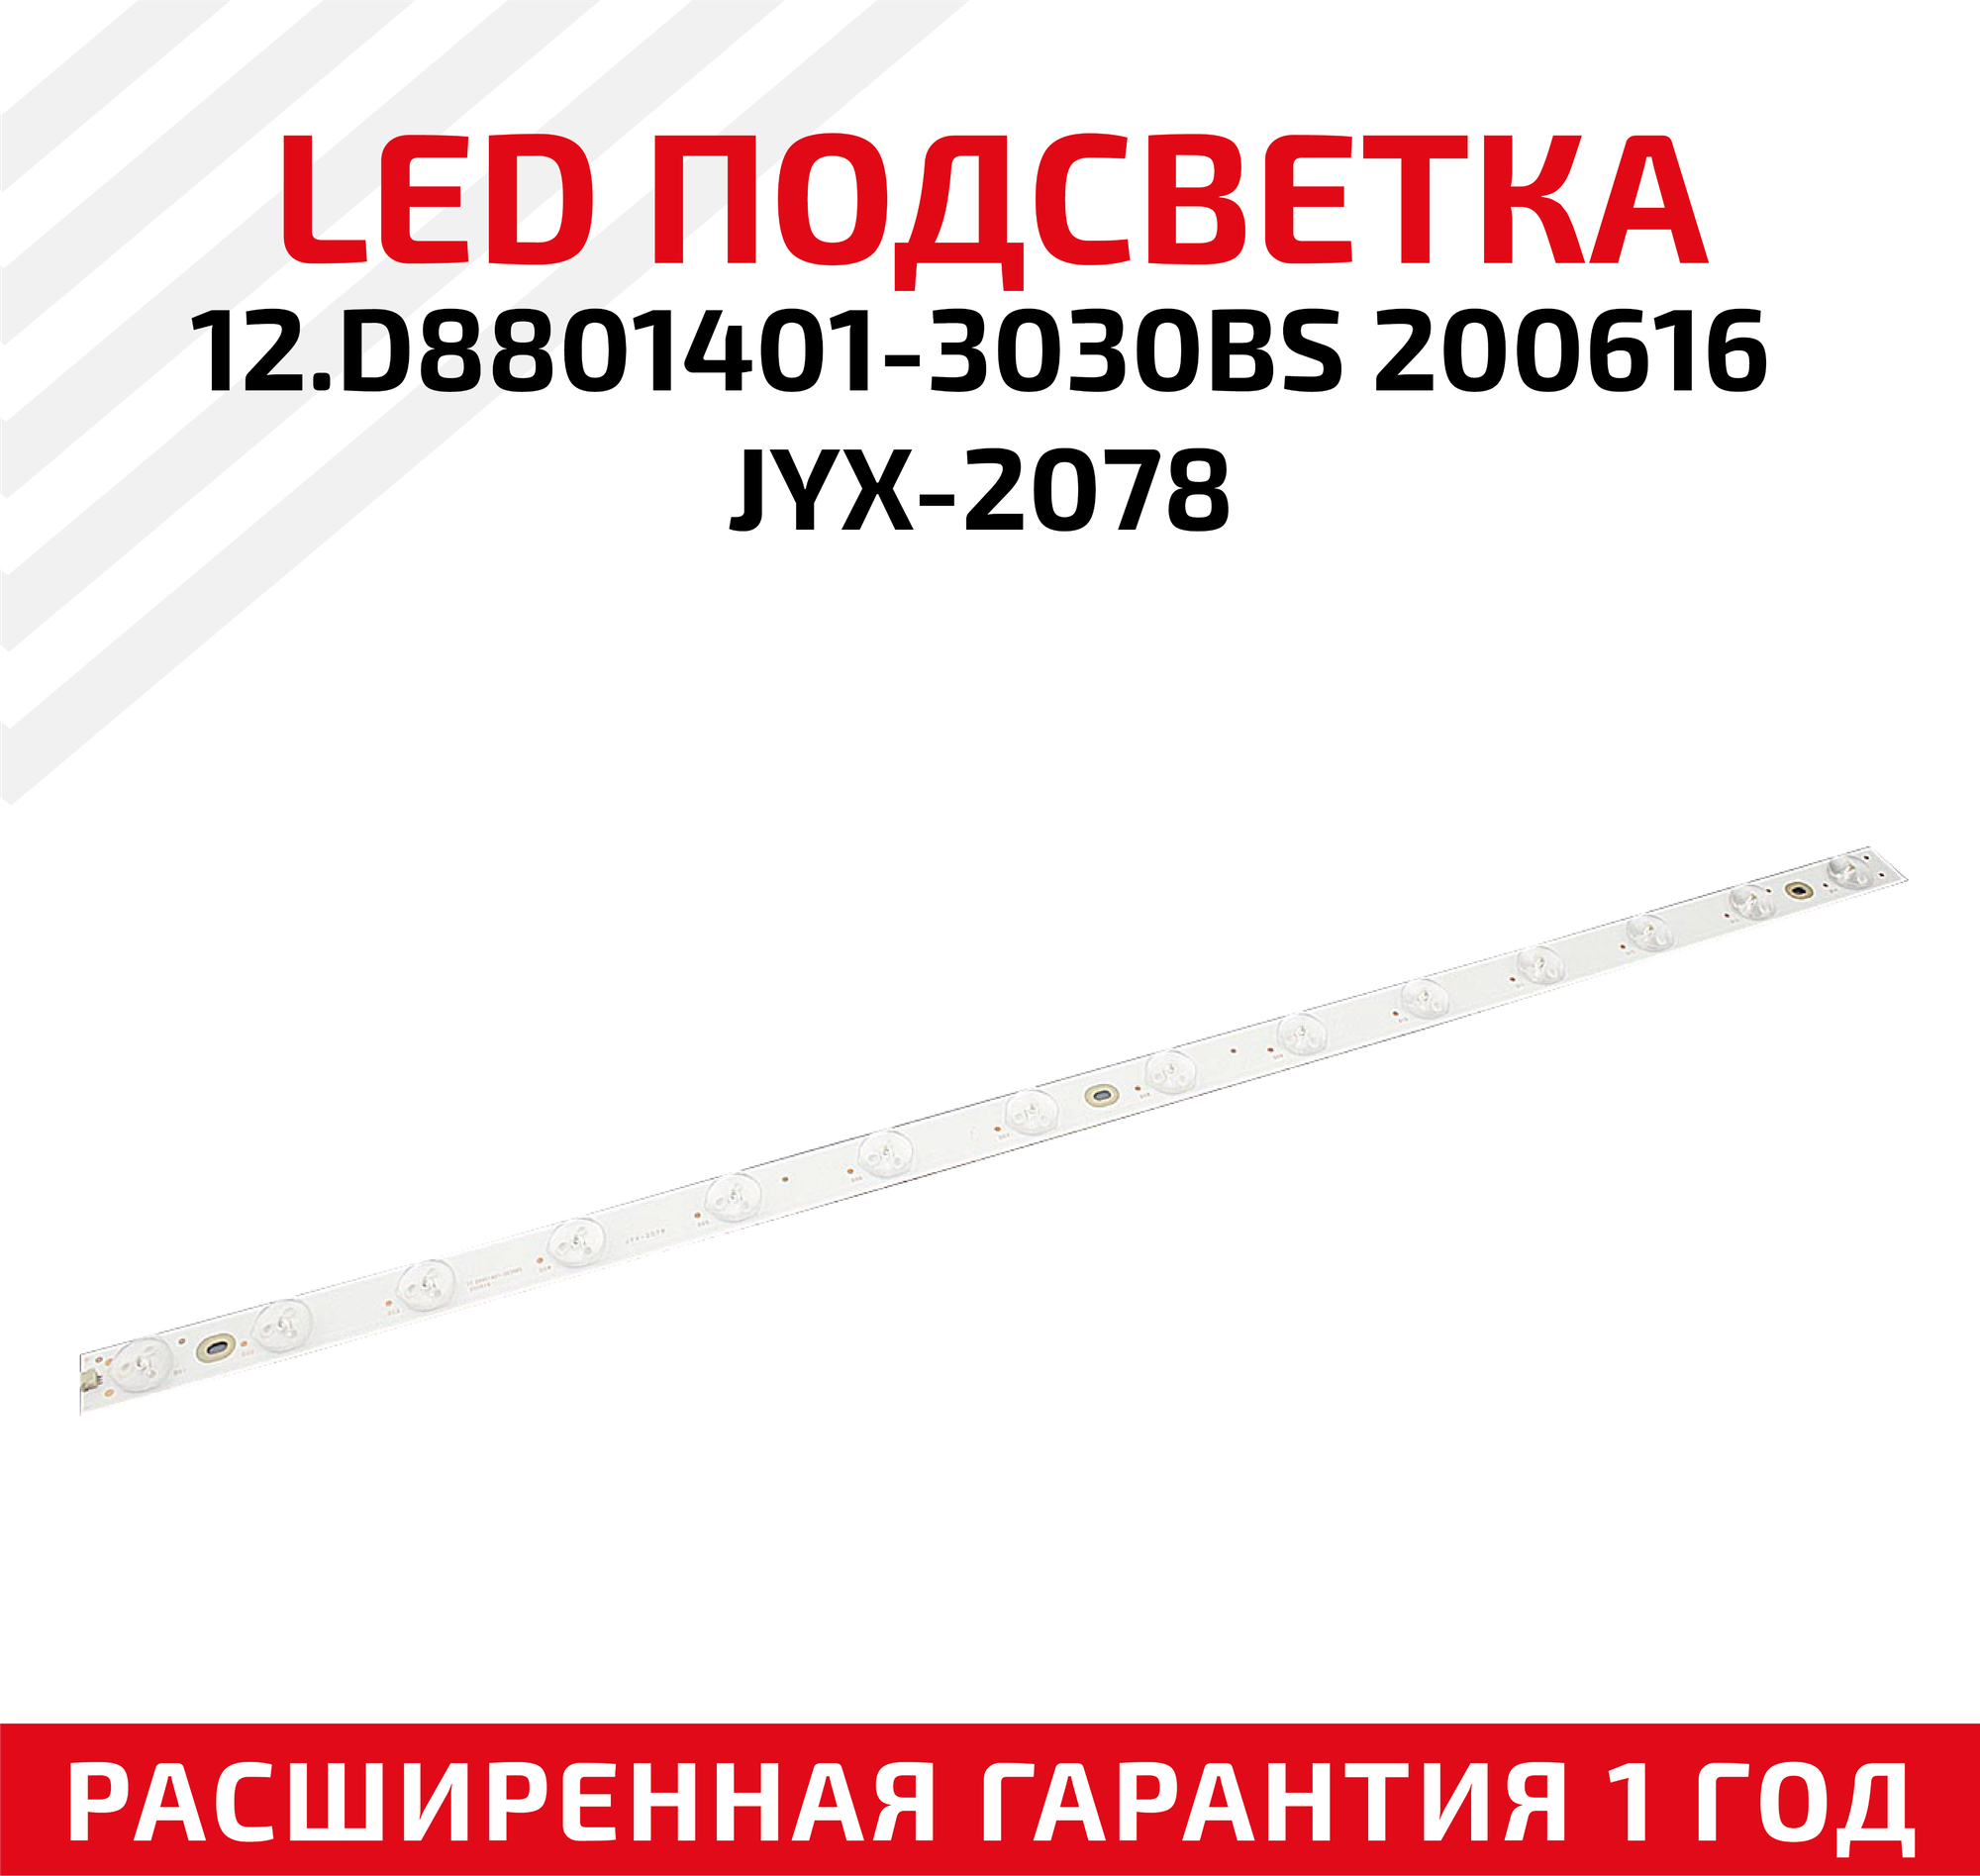 LED подсветка (светодиодная планка) для телевизора 12.D8801401-3030BS 200616 JYX-2078